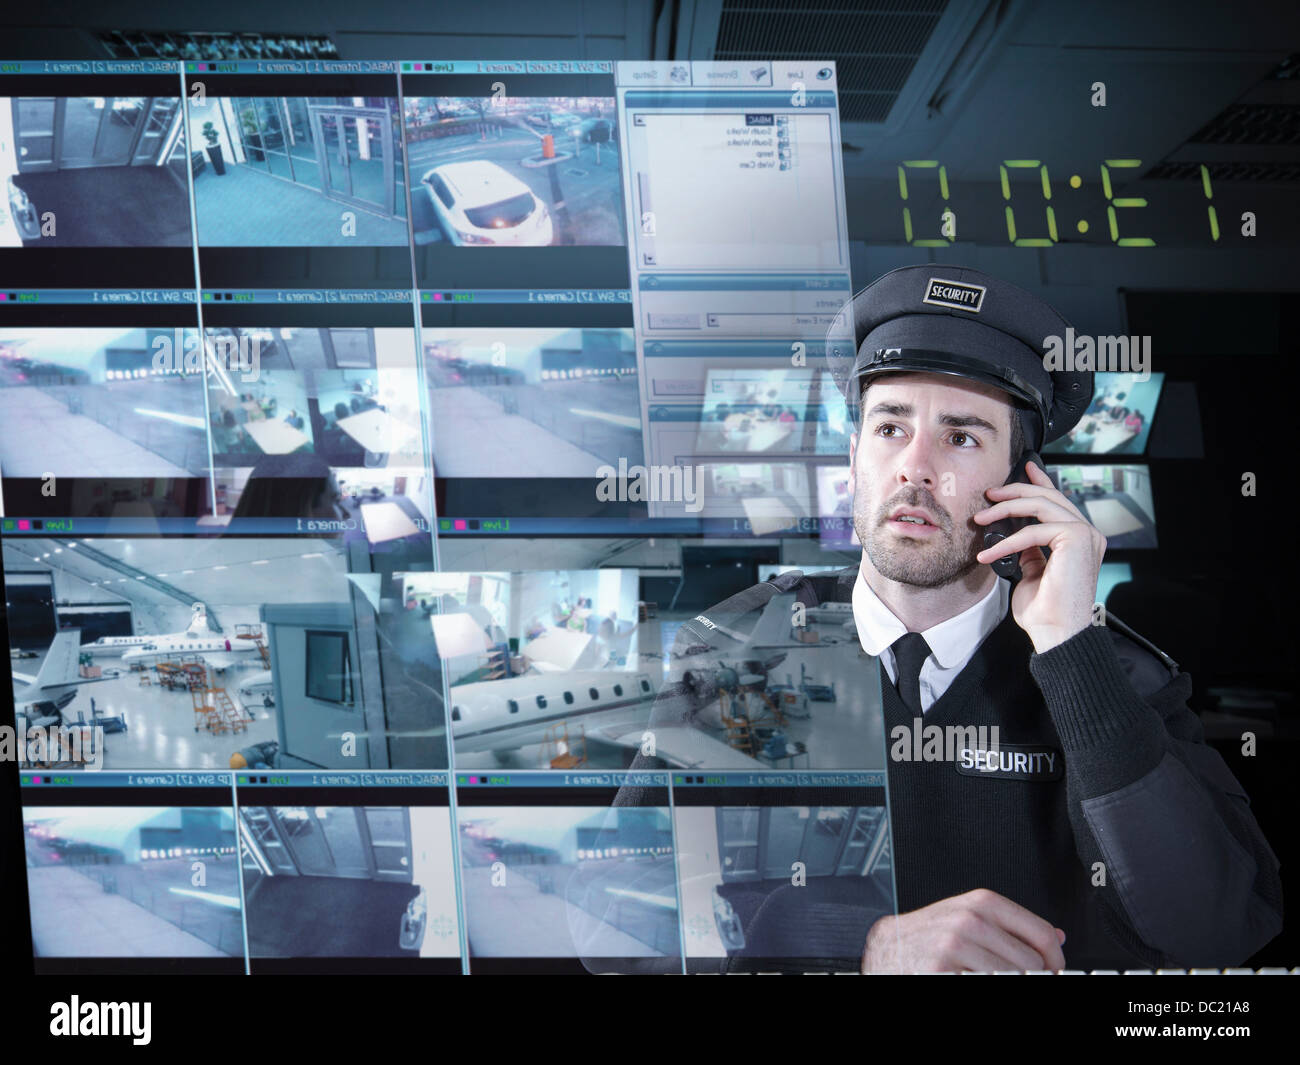 Security guard monitoring camera visuals on interactive screen Stock Photo